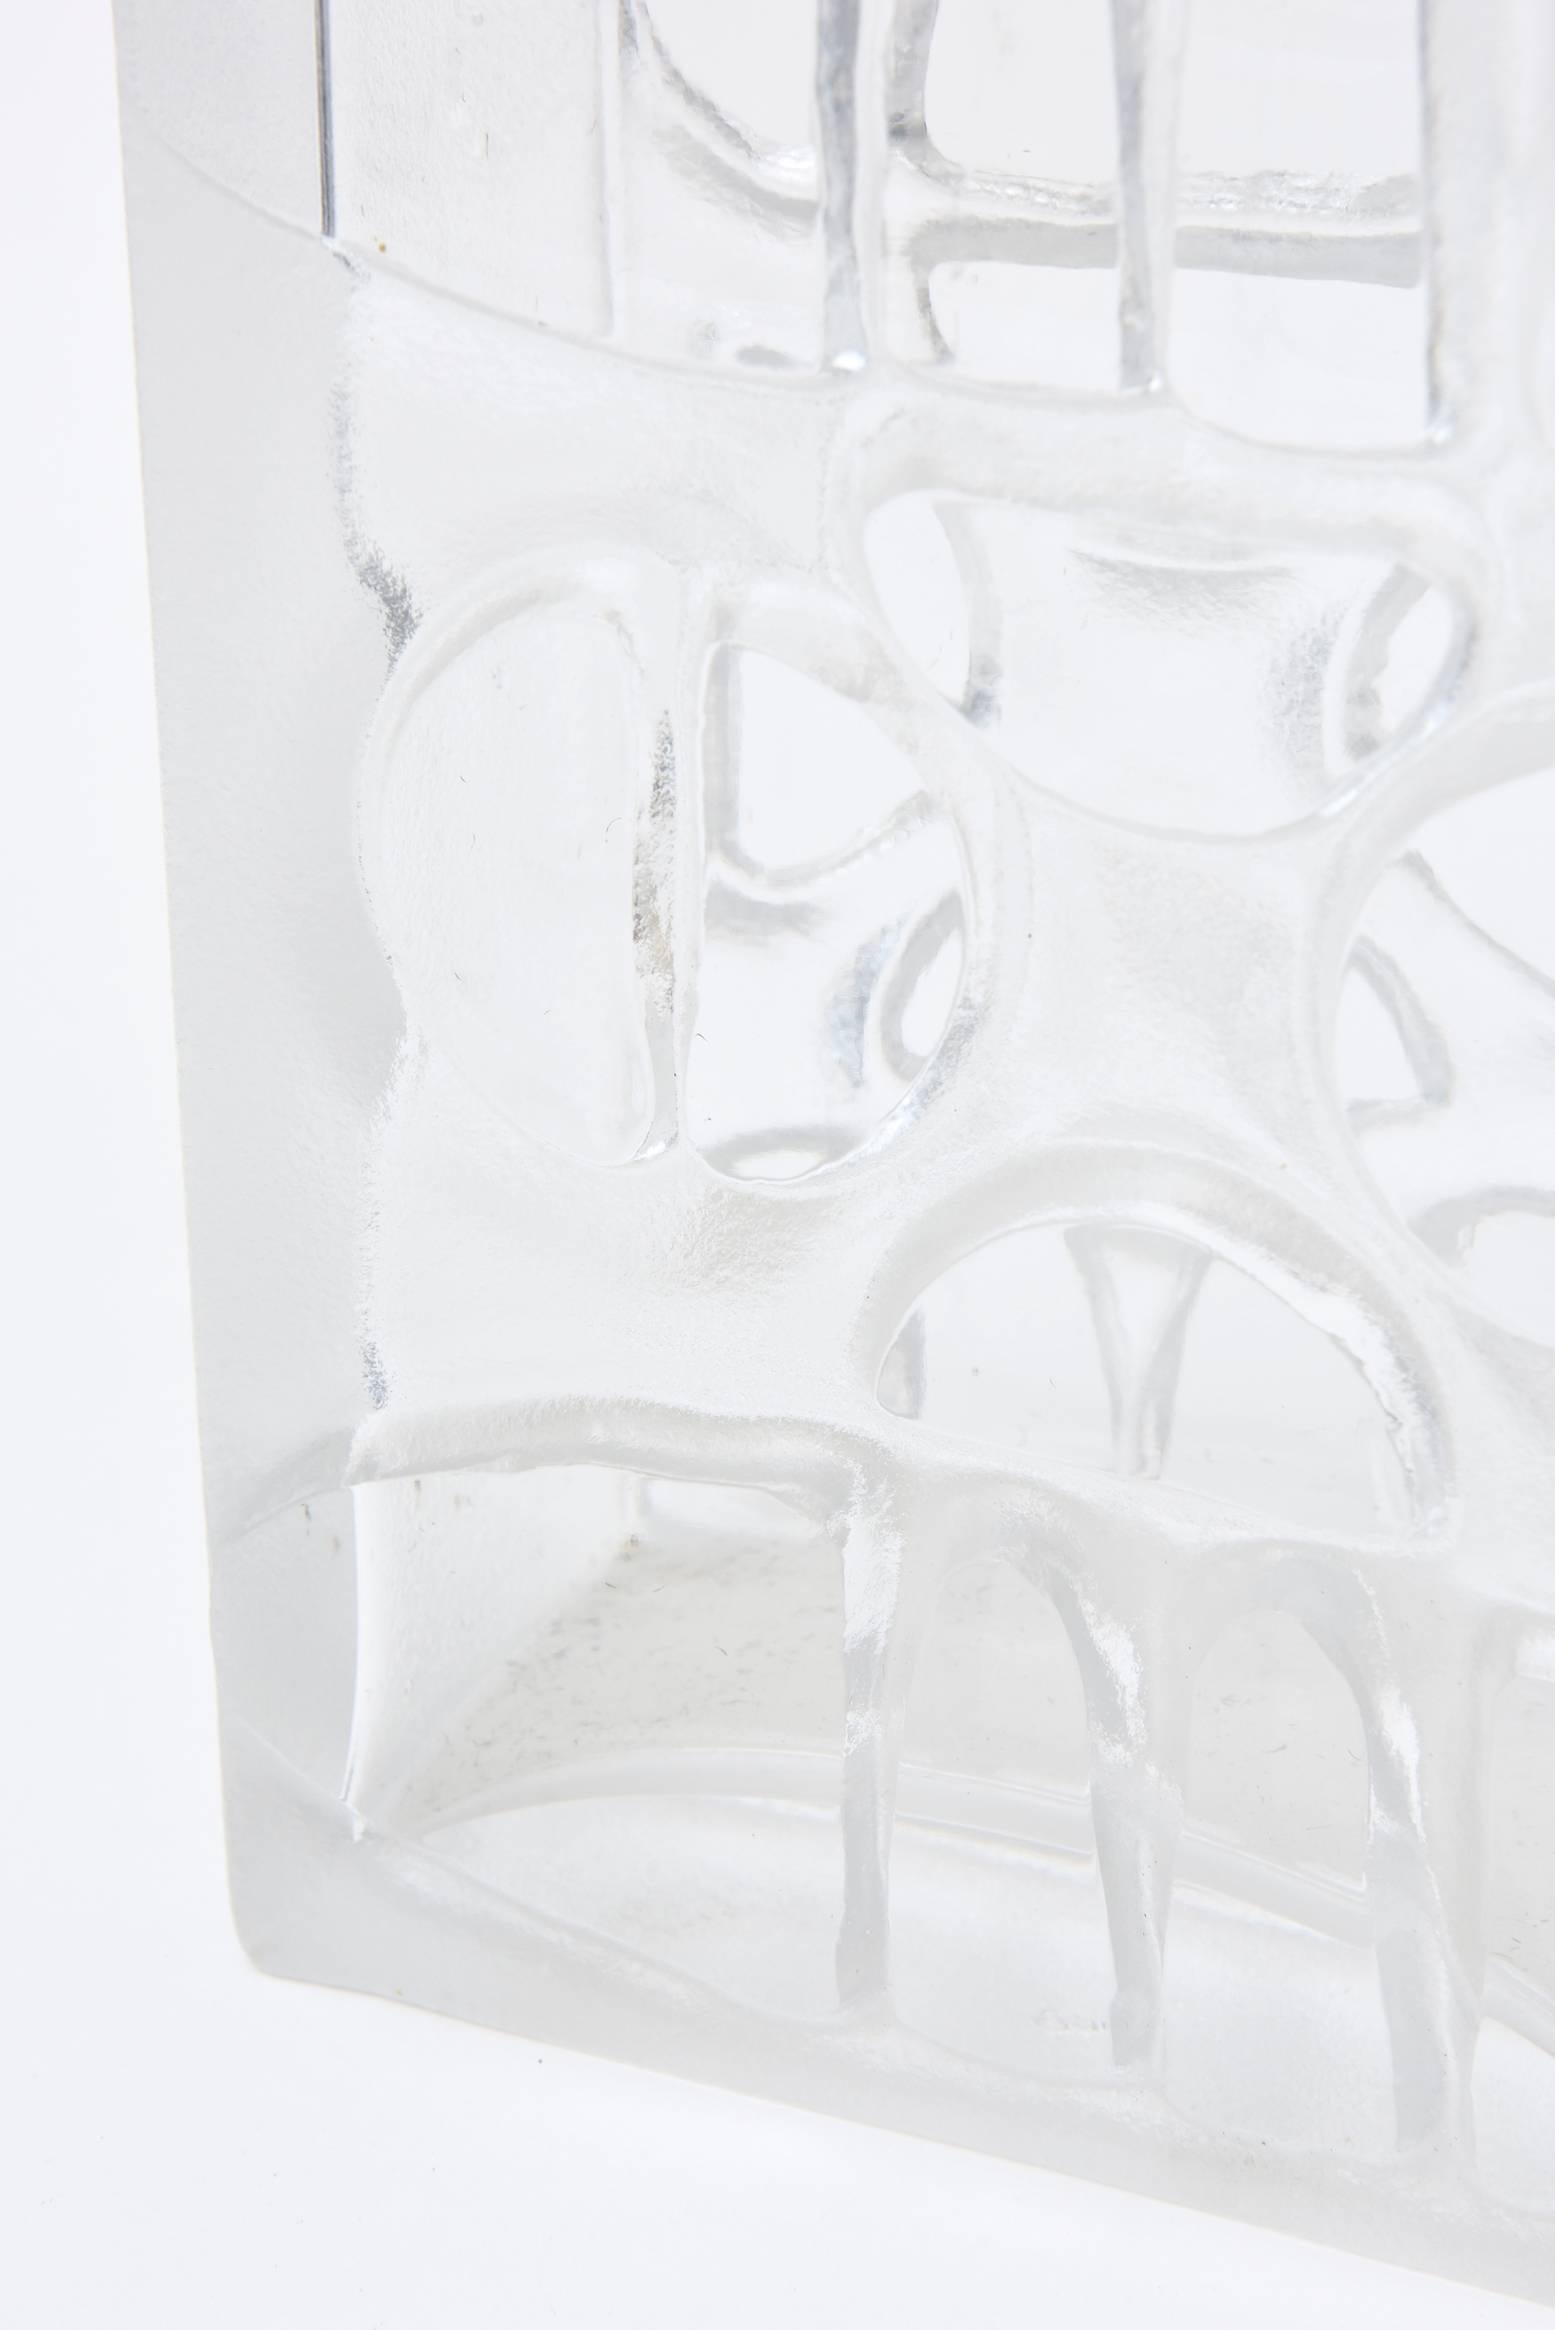 Hallmarked Modernist Danish Cutout Square Glass Vase Desk Accessory 1